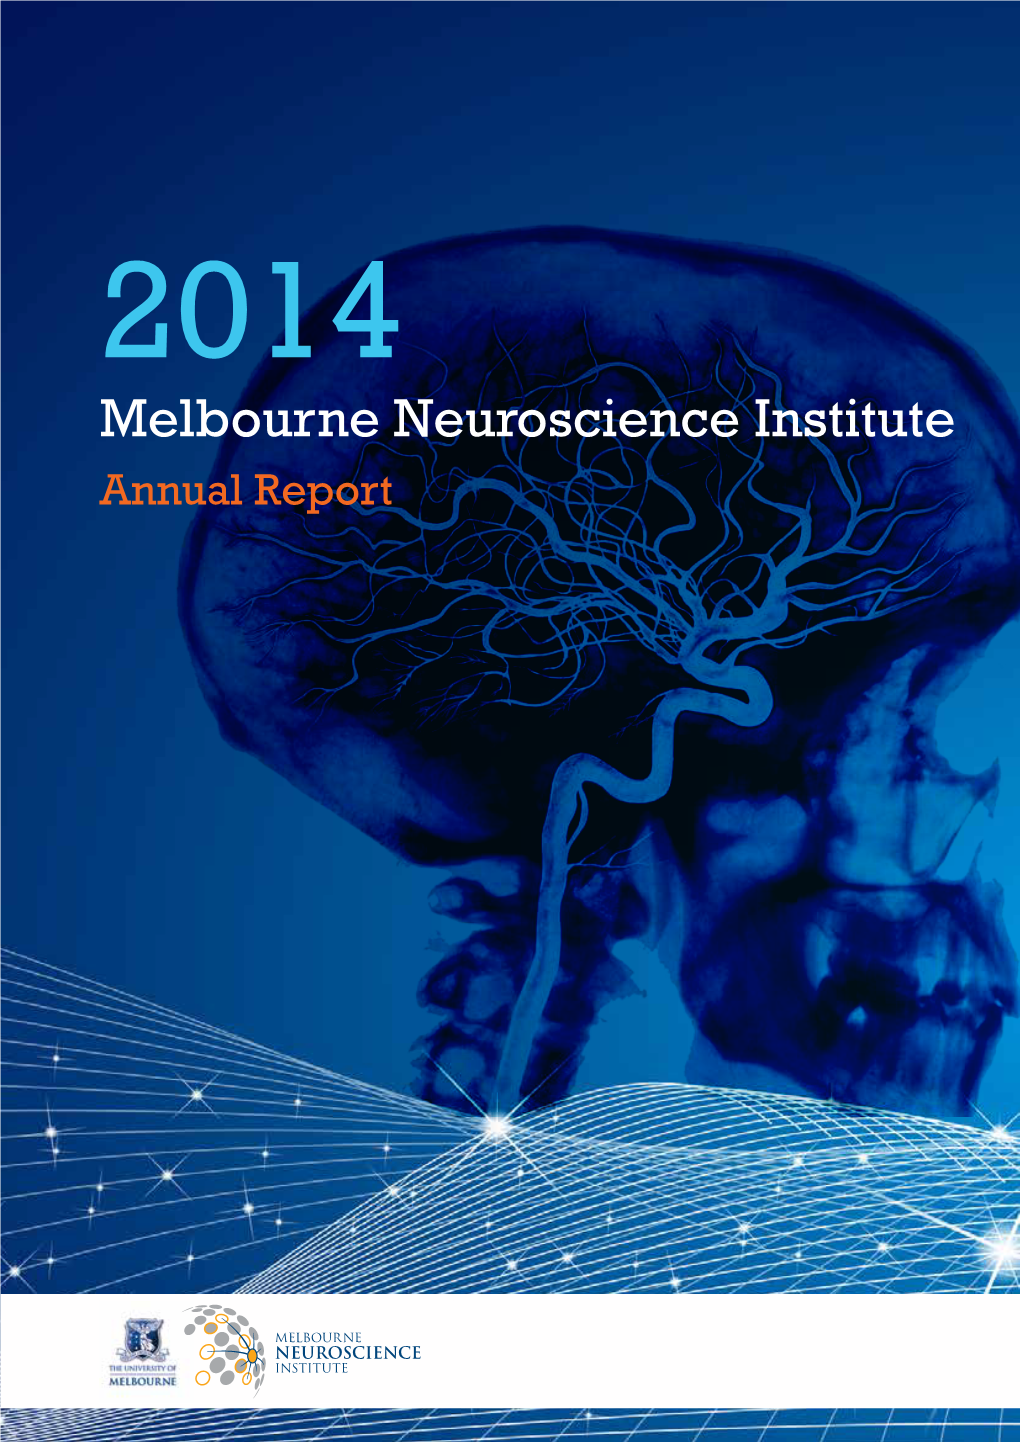 Melbourne Neuroscience Institute Annual Report